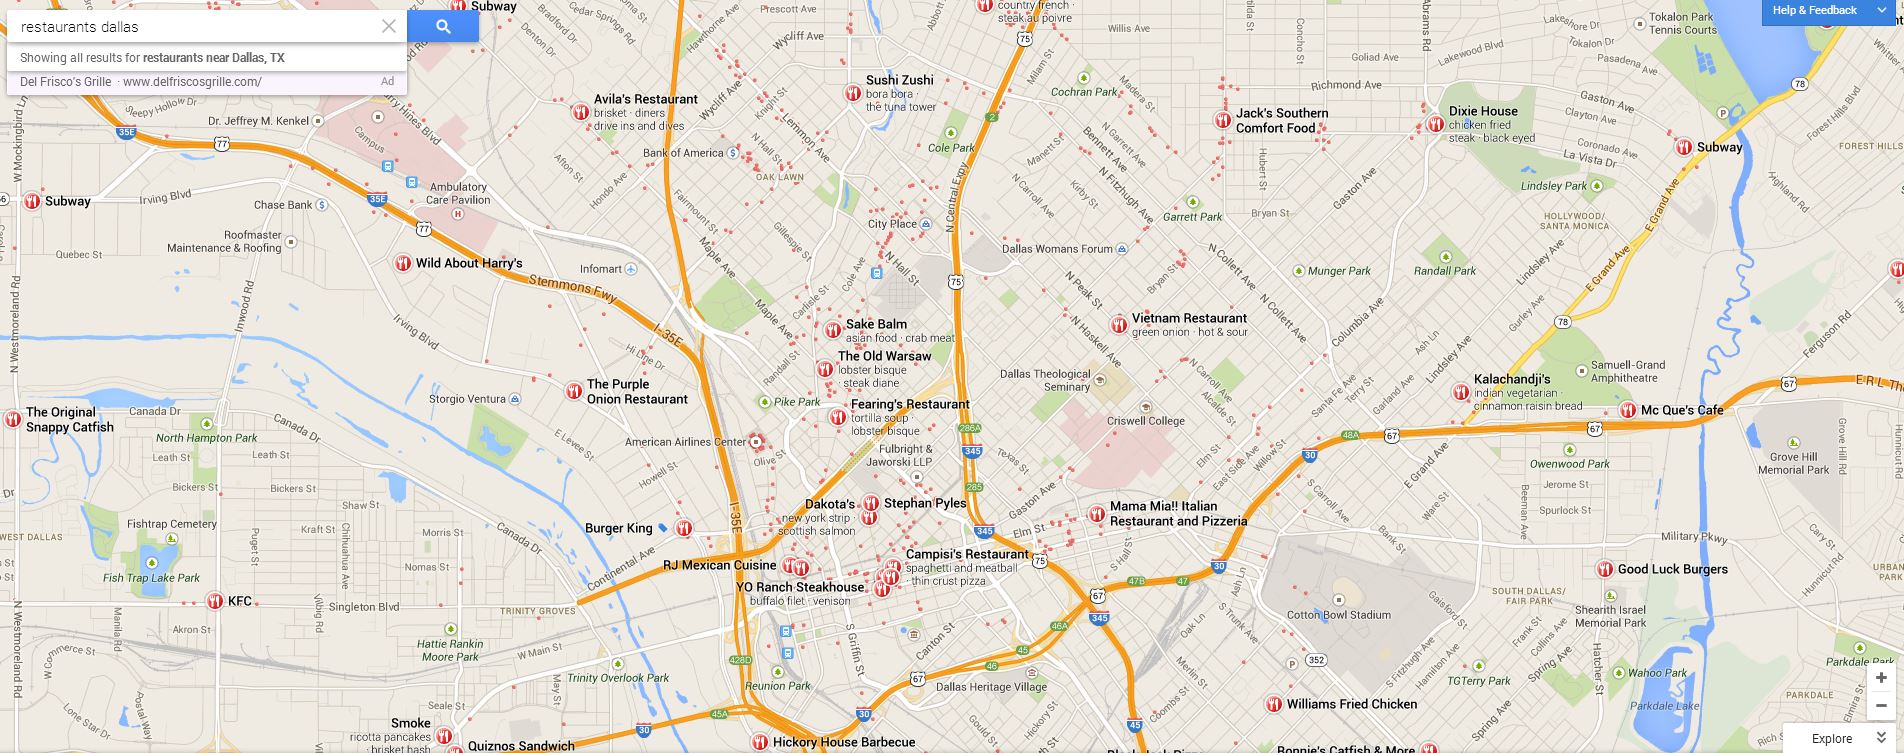 Google Maps-restaurants in Dallas